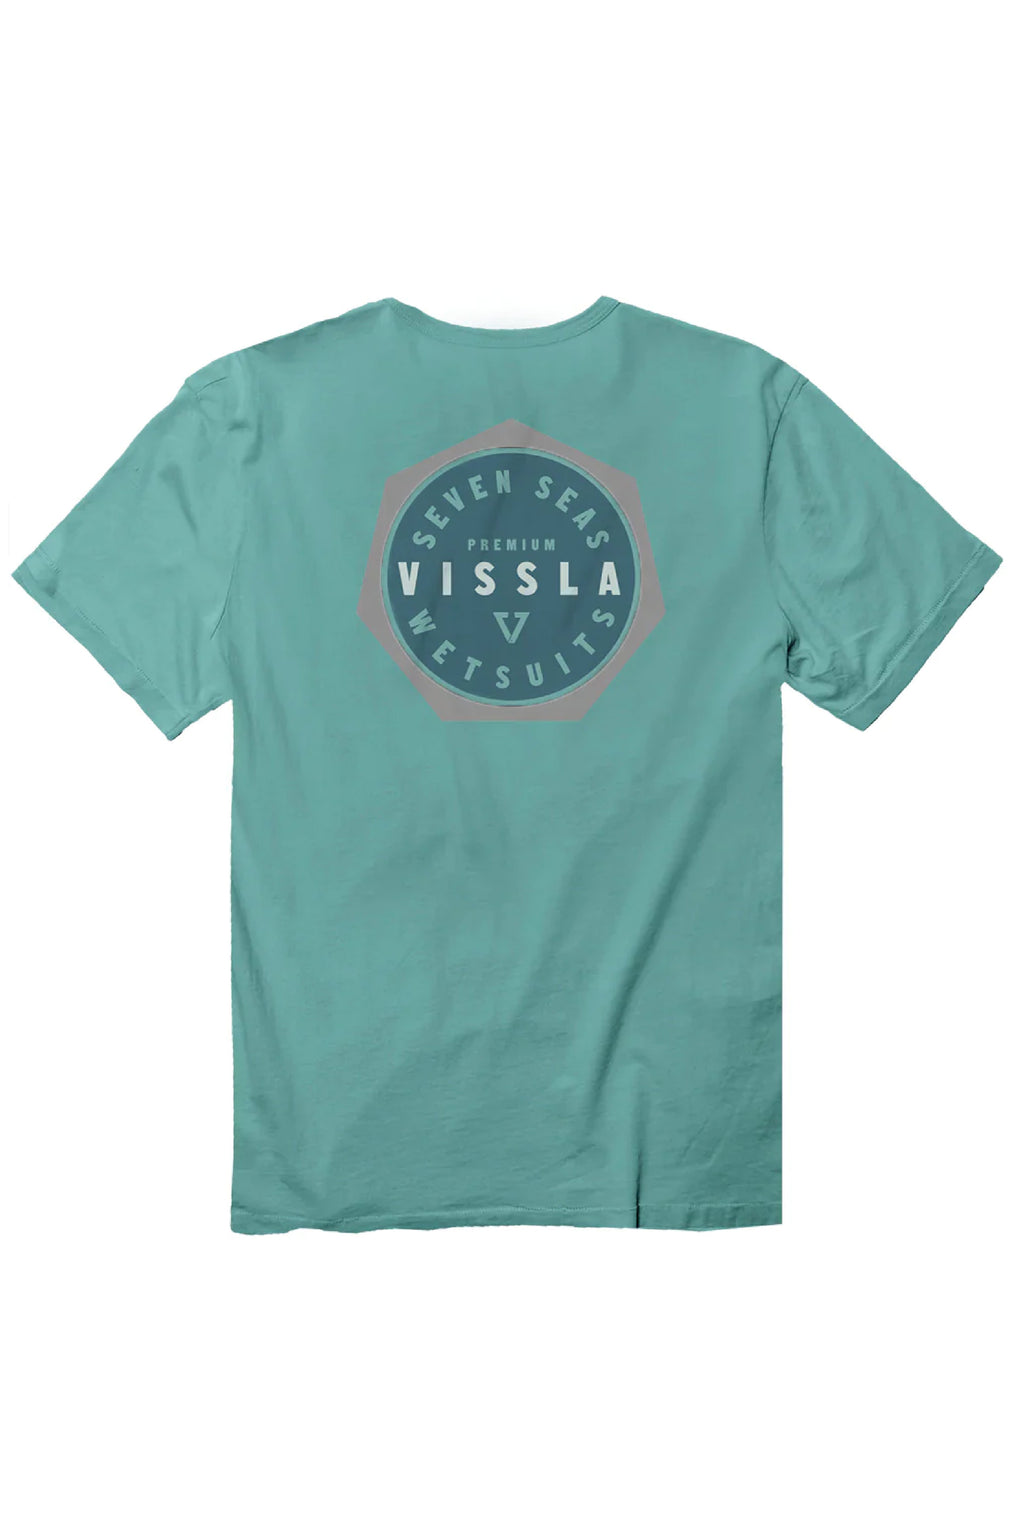 Vissla - Seven Seas T-Shirt